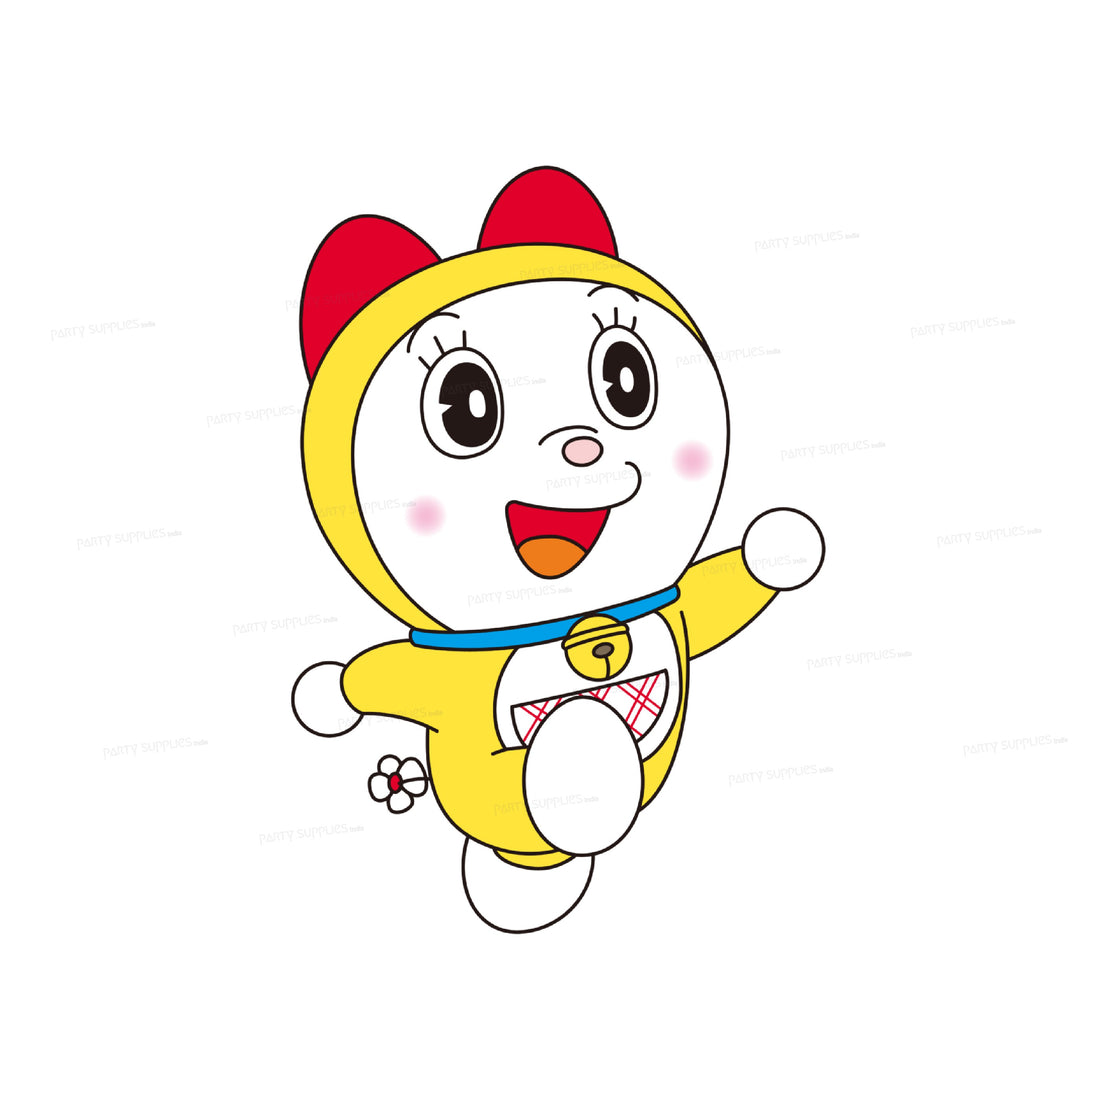 PSI Doraemon Theme Cutout - 09